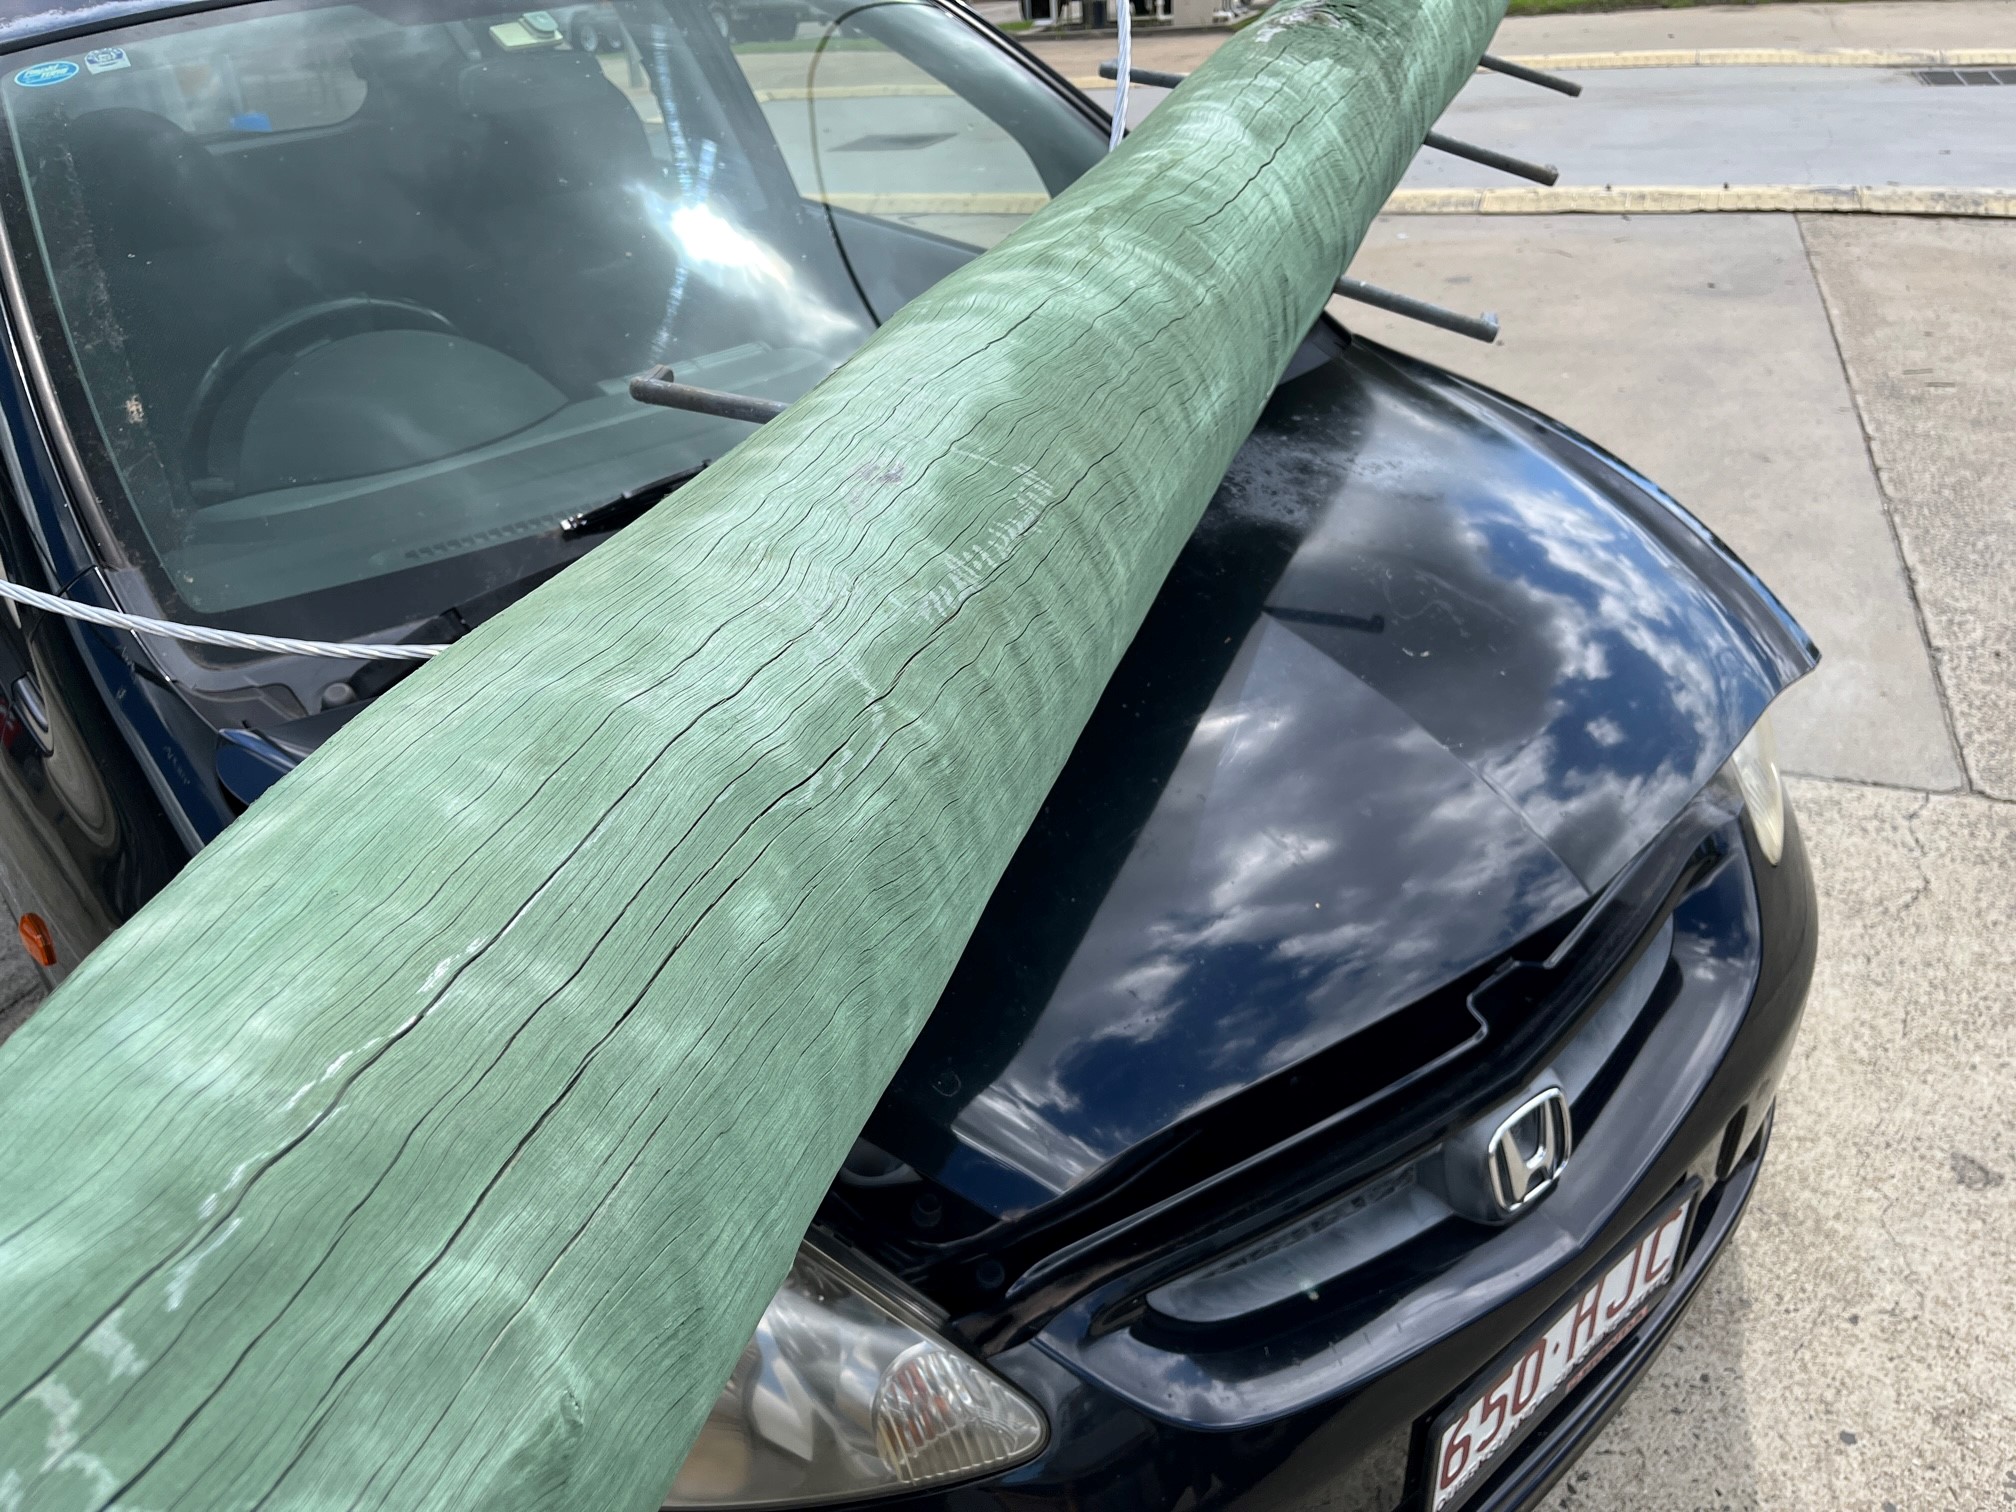 Car Vs Pole